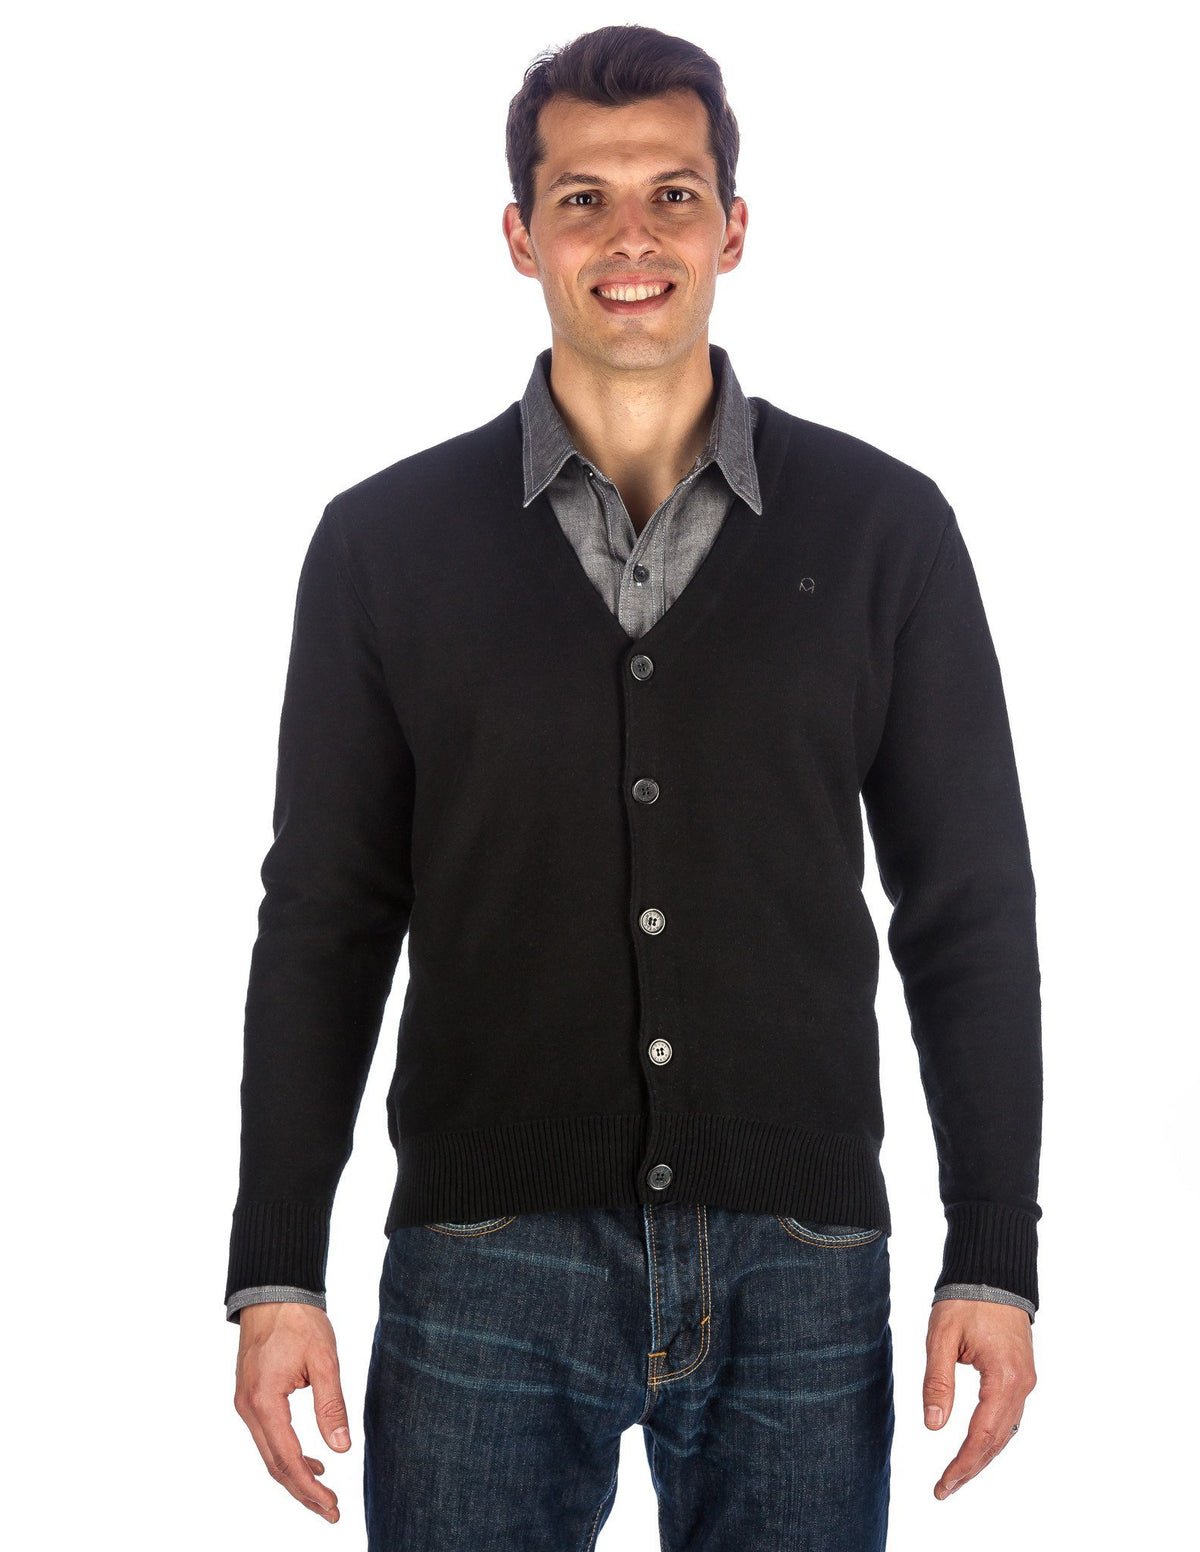 Men's 100% Cotton Cardigan Sweater - Black